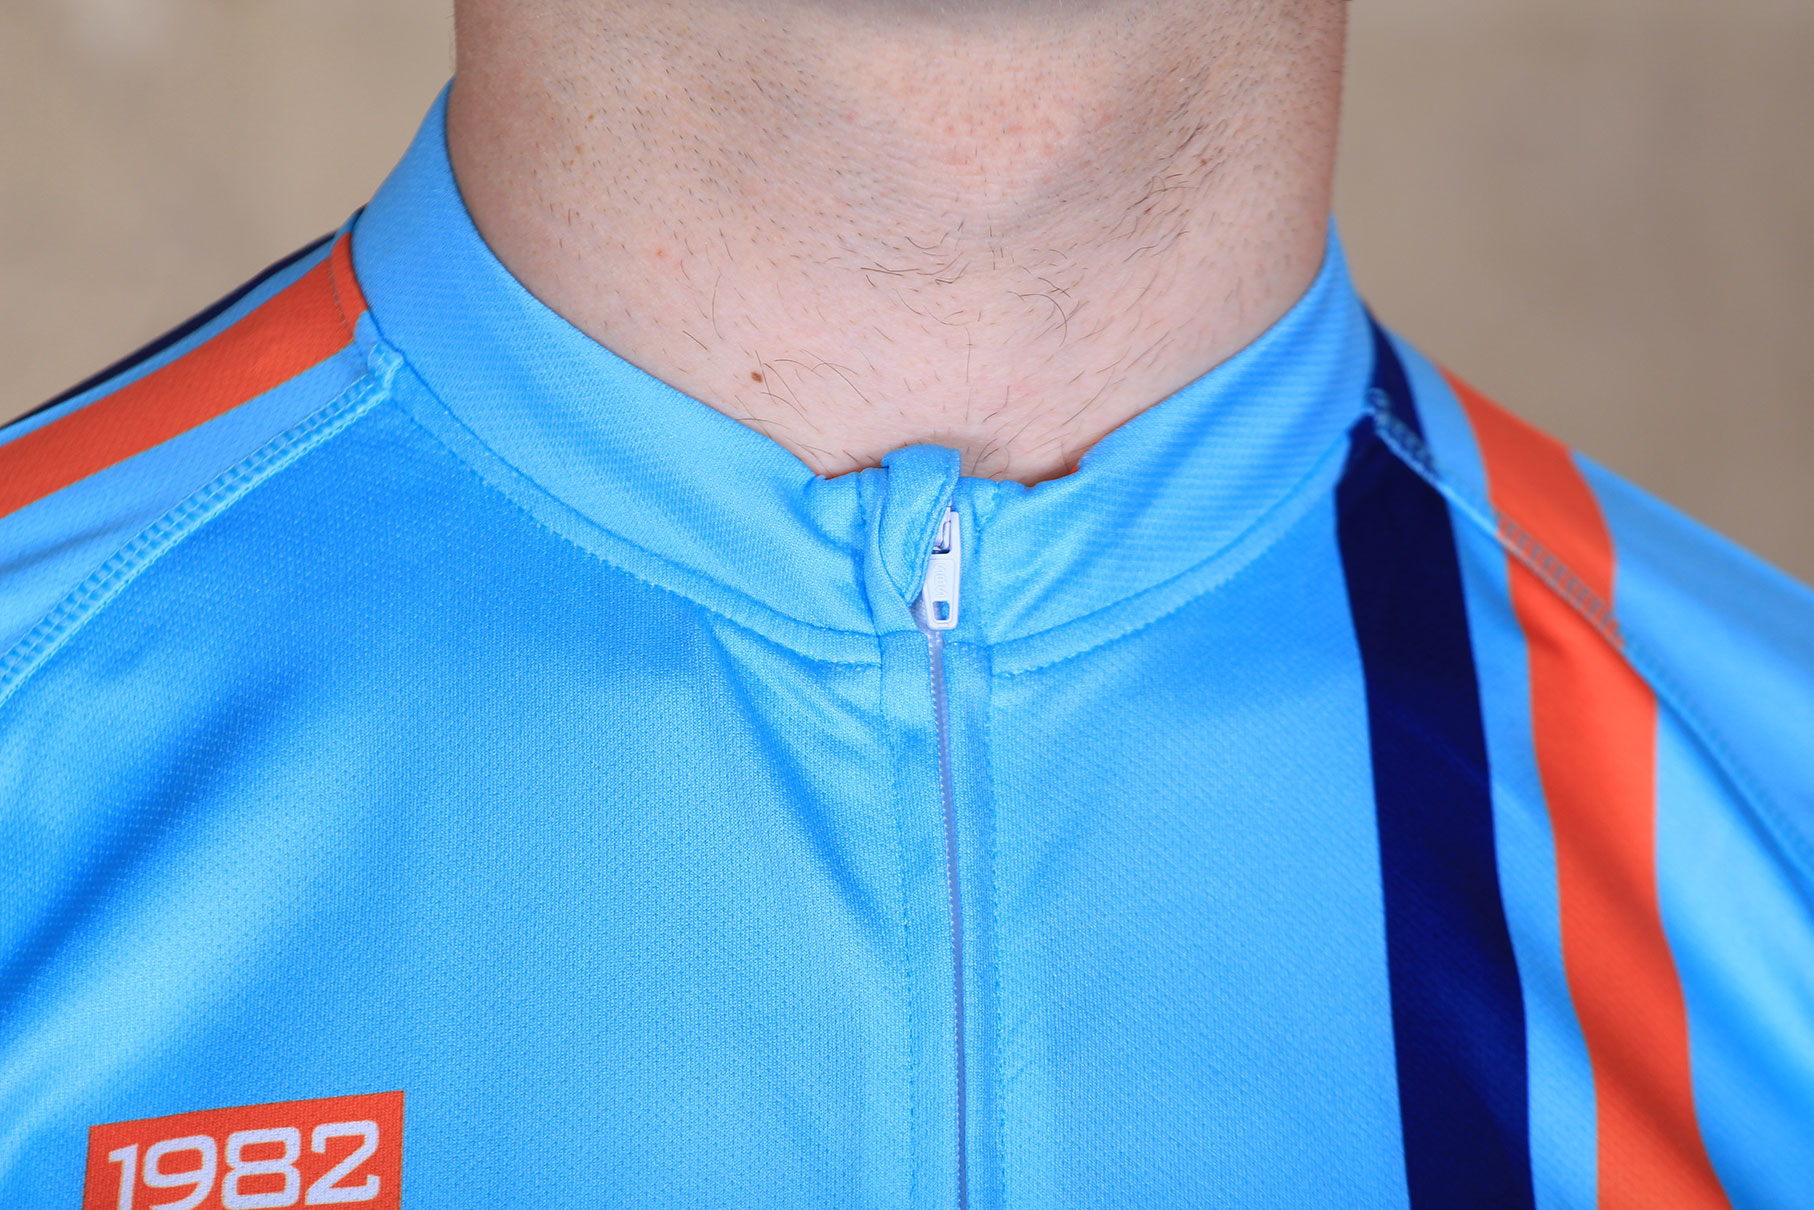 Lusso Men's LeMans Short Sleeve Cycling Jersey Blue S-XXL RRP £49.99 